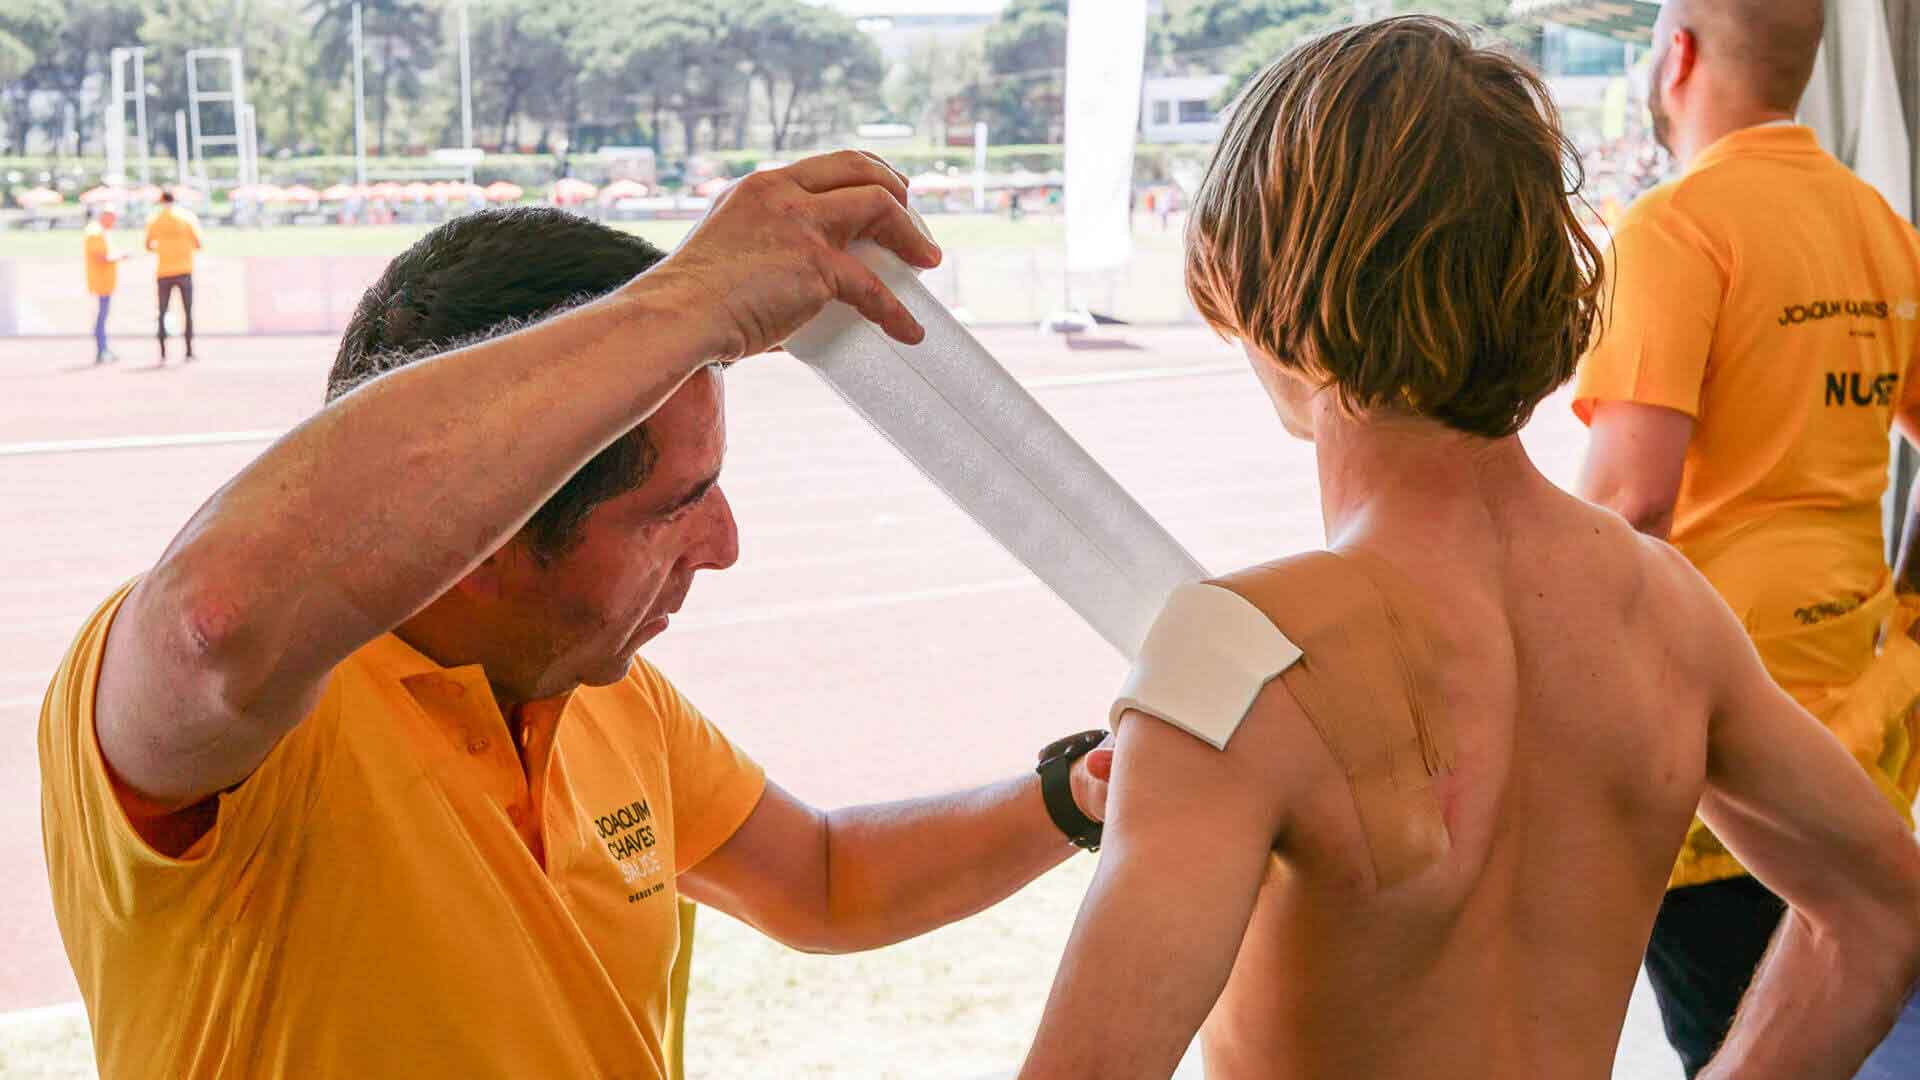 Doctor treating athlete's injury